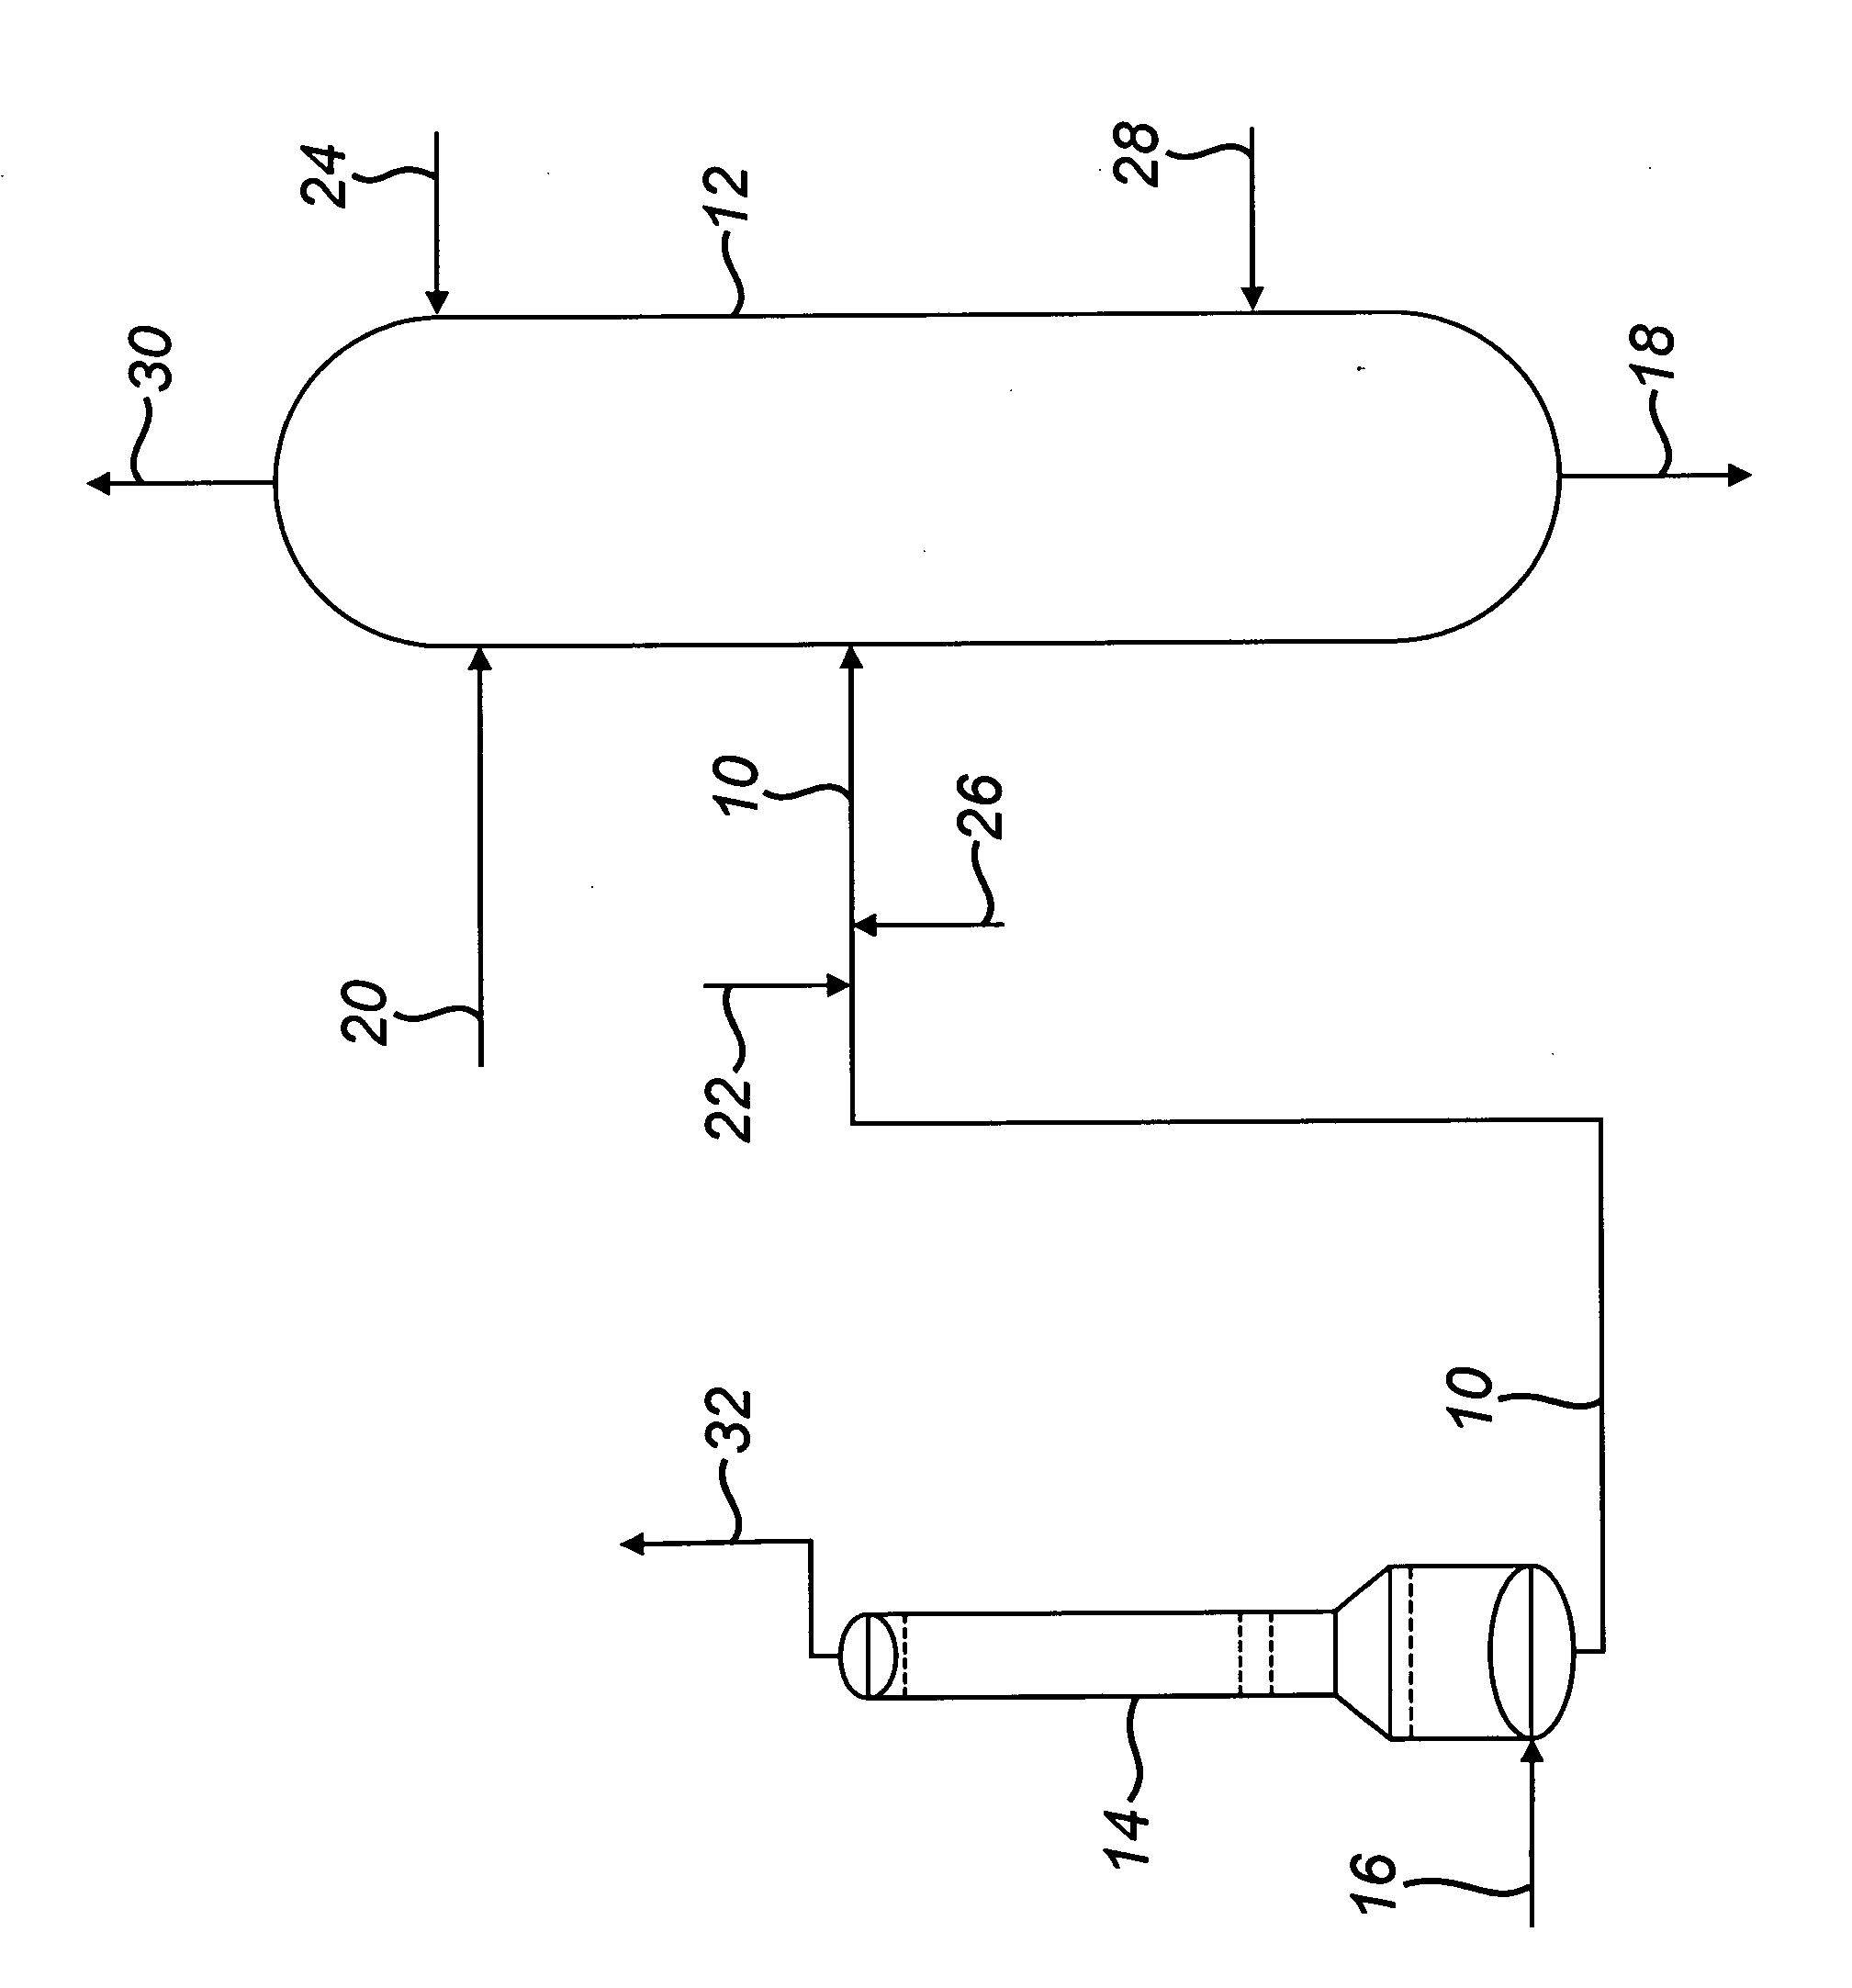 Method for production of purified (meth)acrylic acid